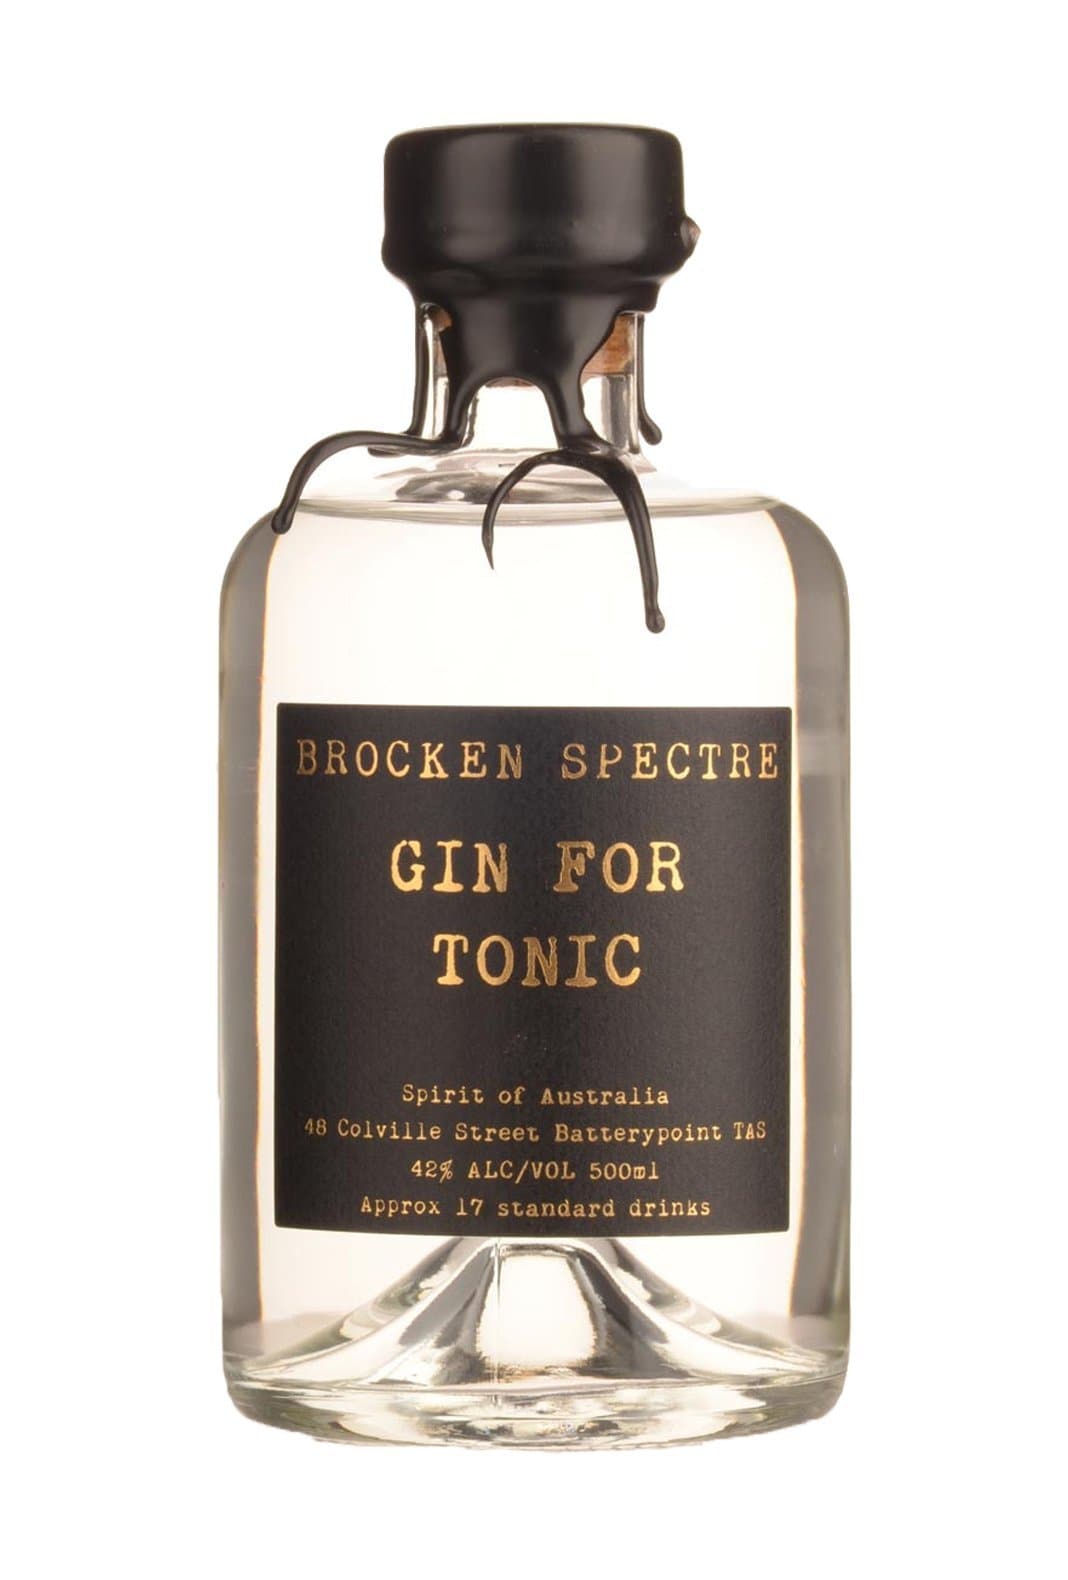 Brocken Spectre Gin for Tonic 42% 500ml | Gin | Shop online at Spirits of France